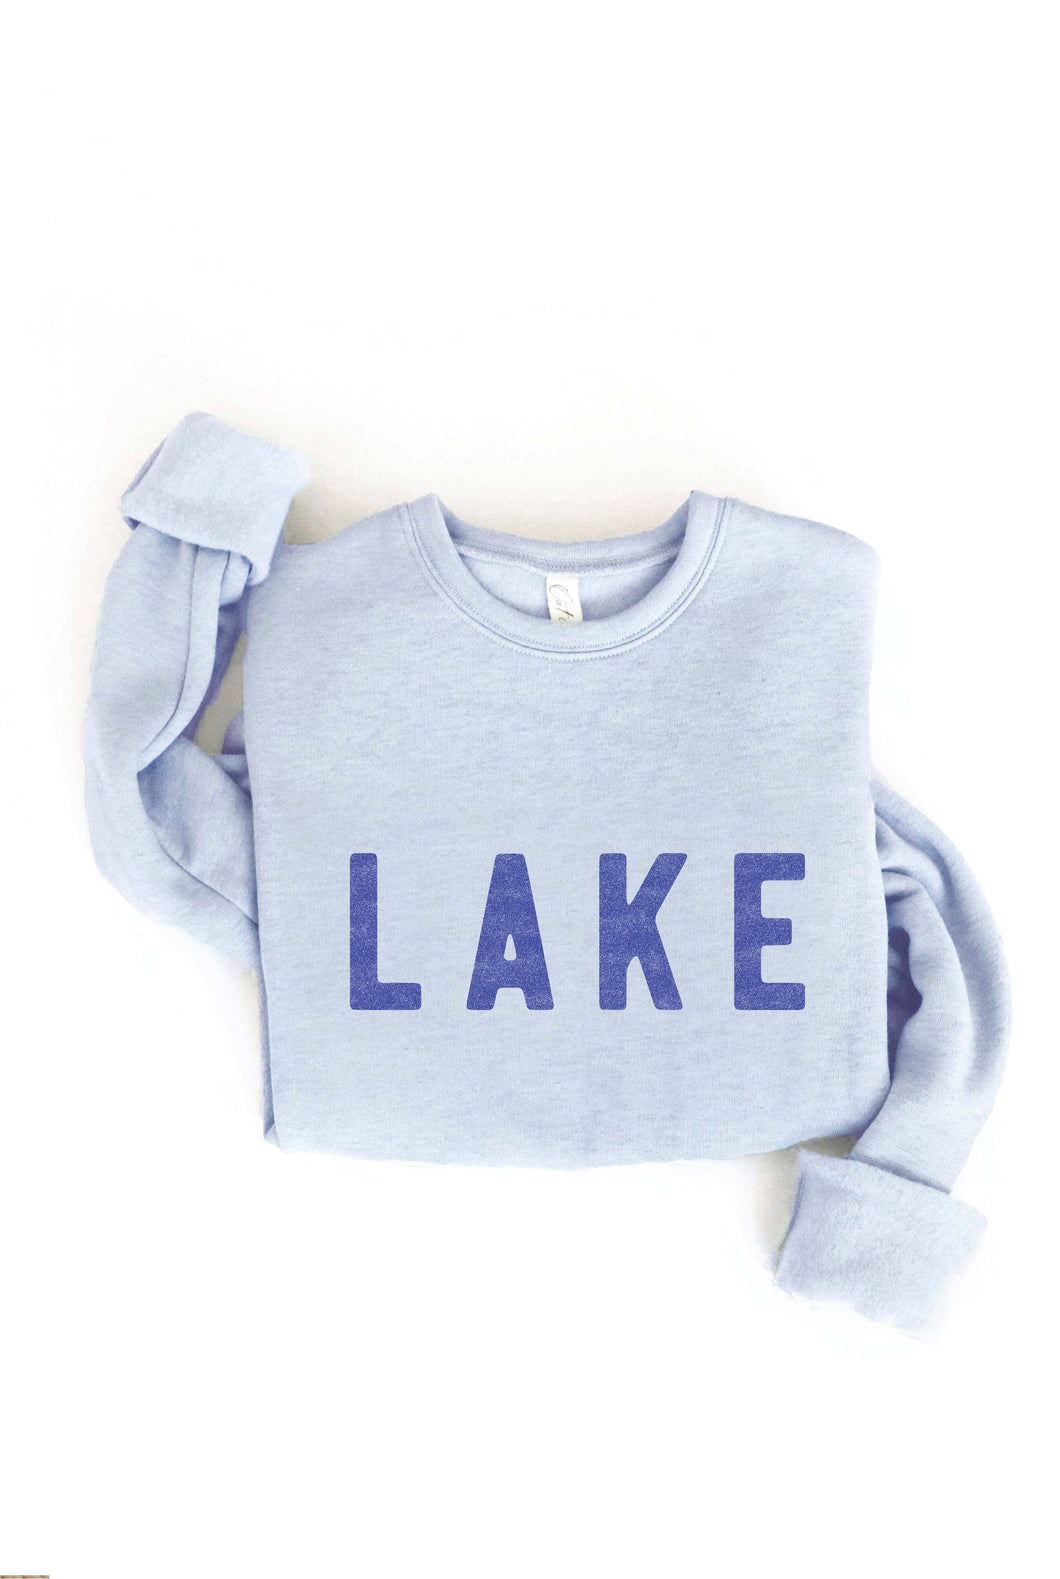 LAKE Graphic Sweatshirt: S / LIGHT BLUE